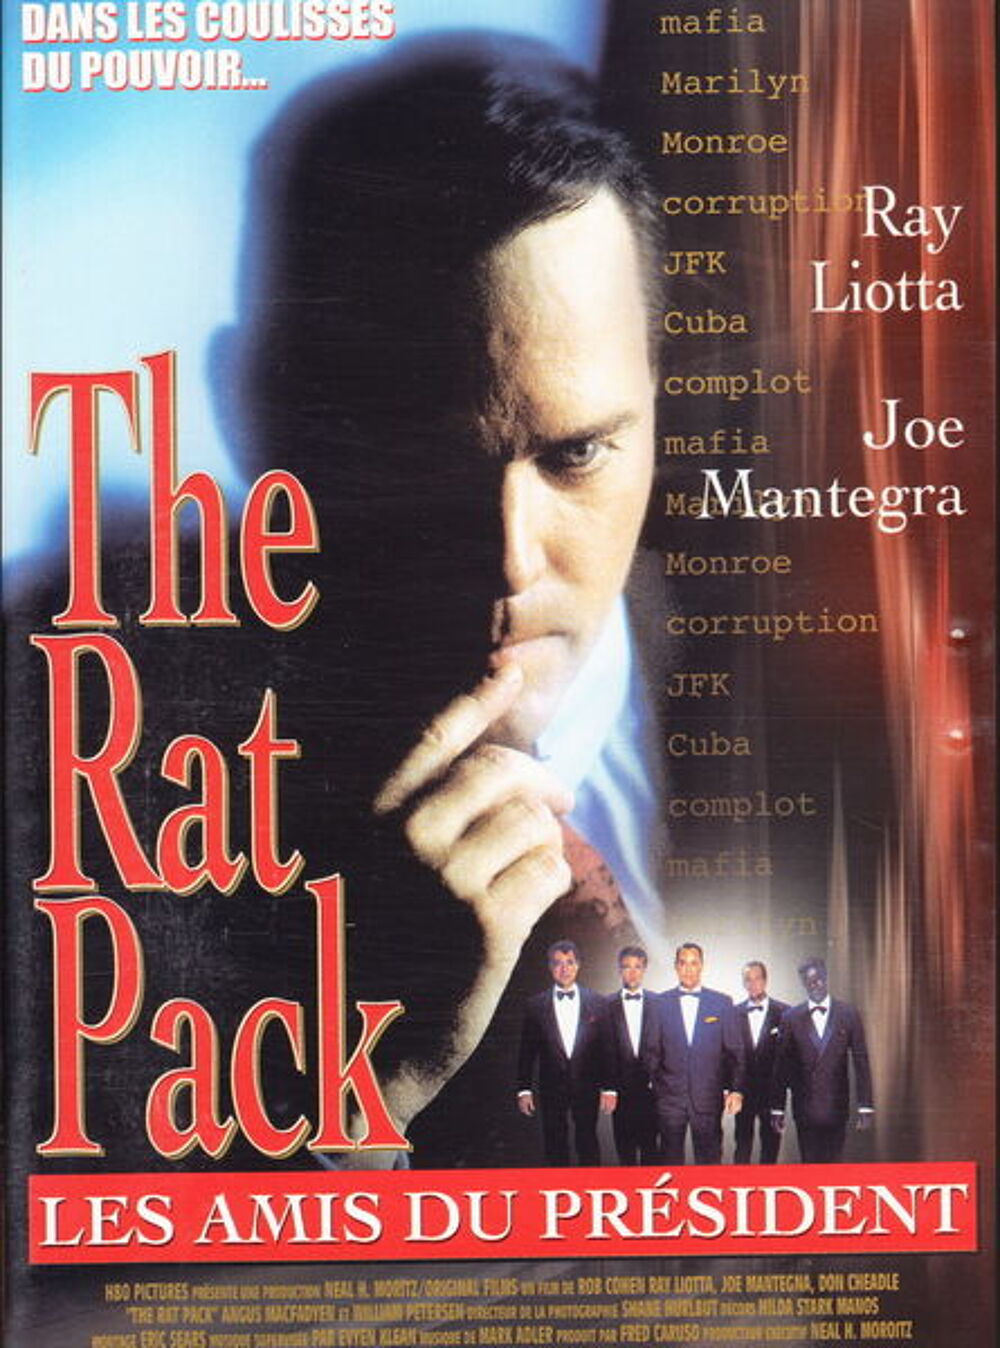 DVD The Rat pack
DVD et blu-ray